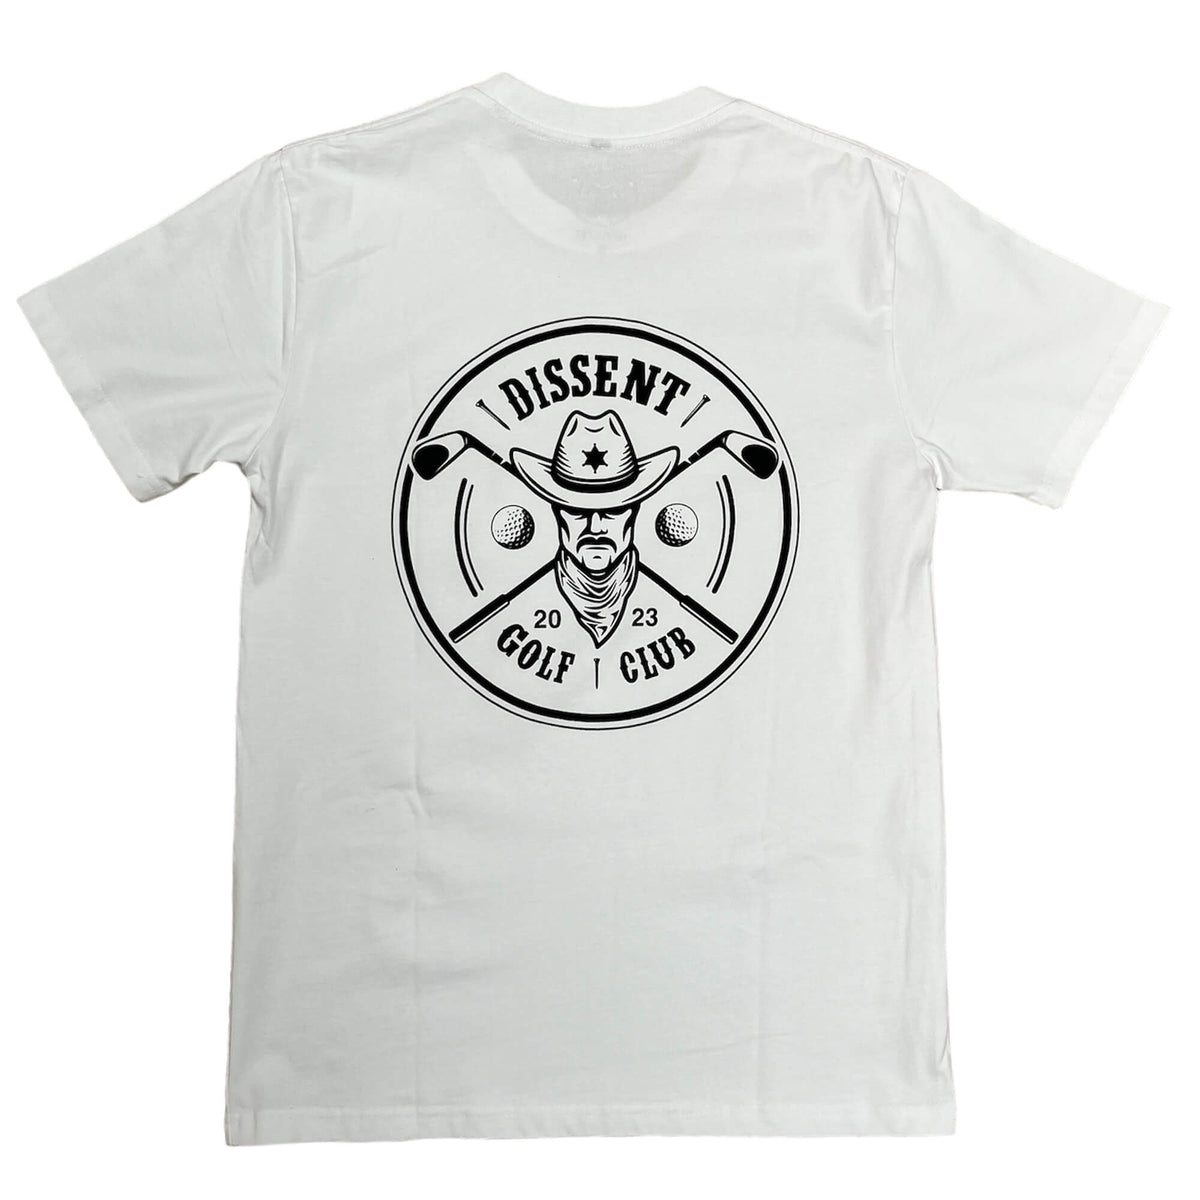 Dissent Golf Club Bandit Logo T-Shirt White